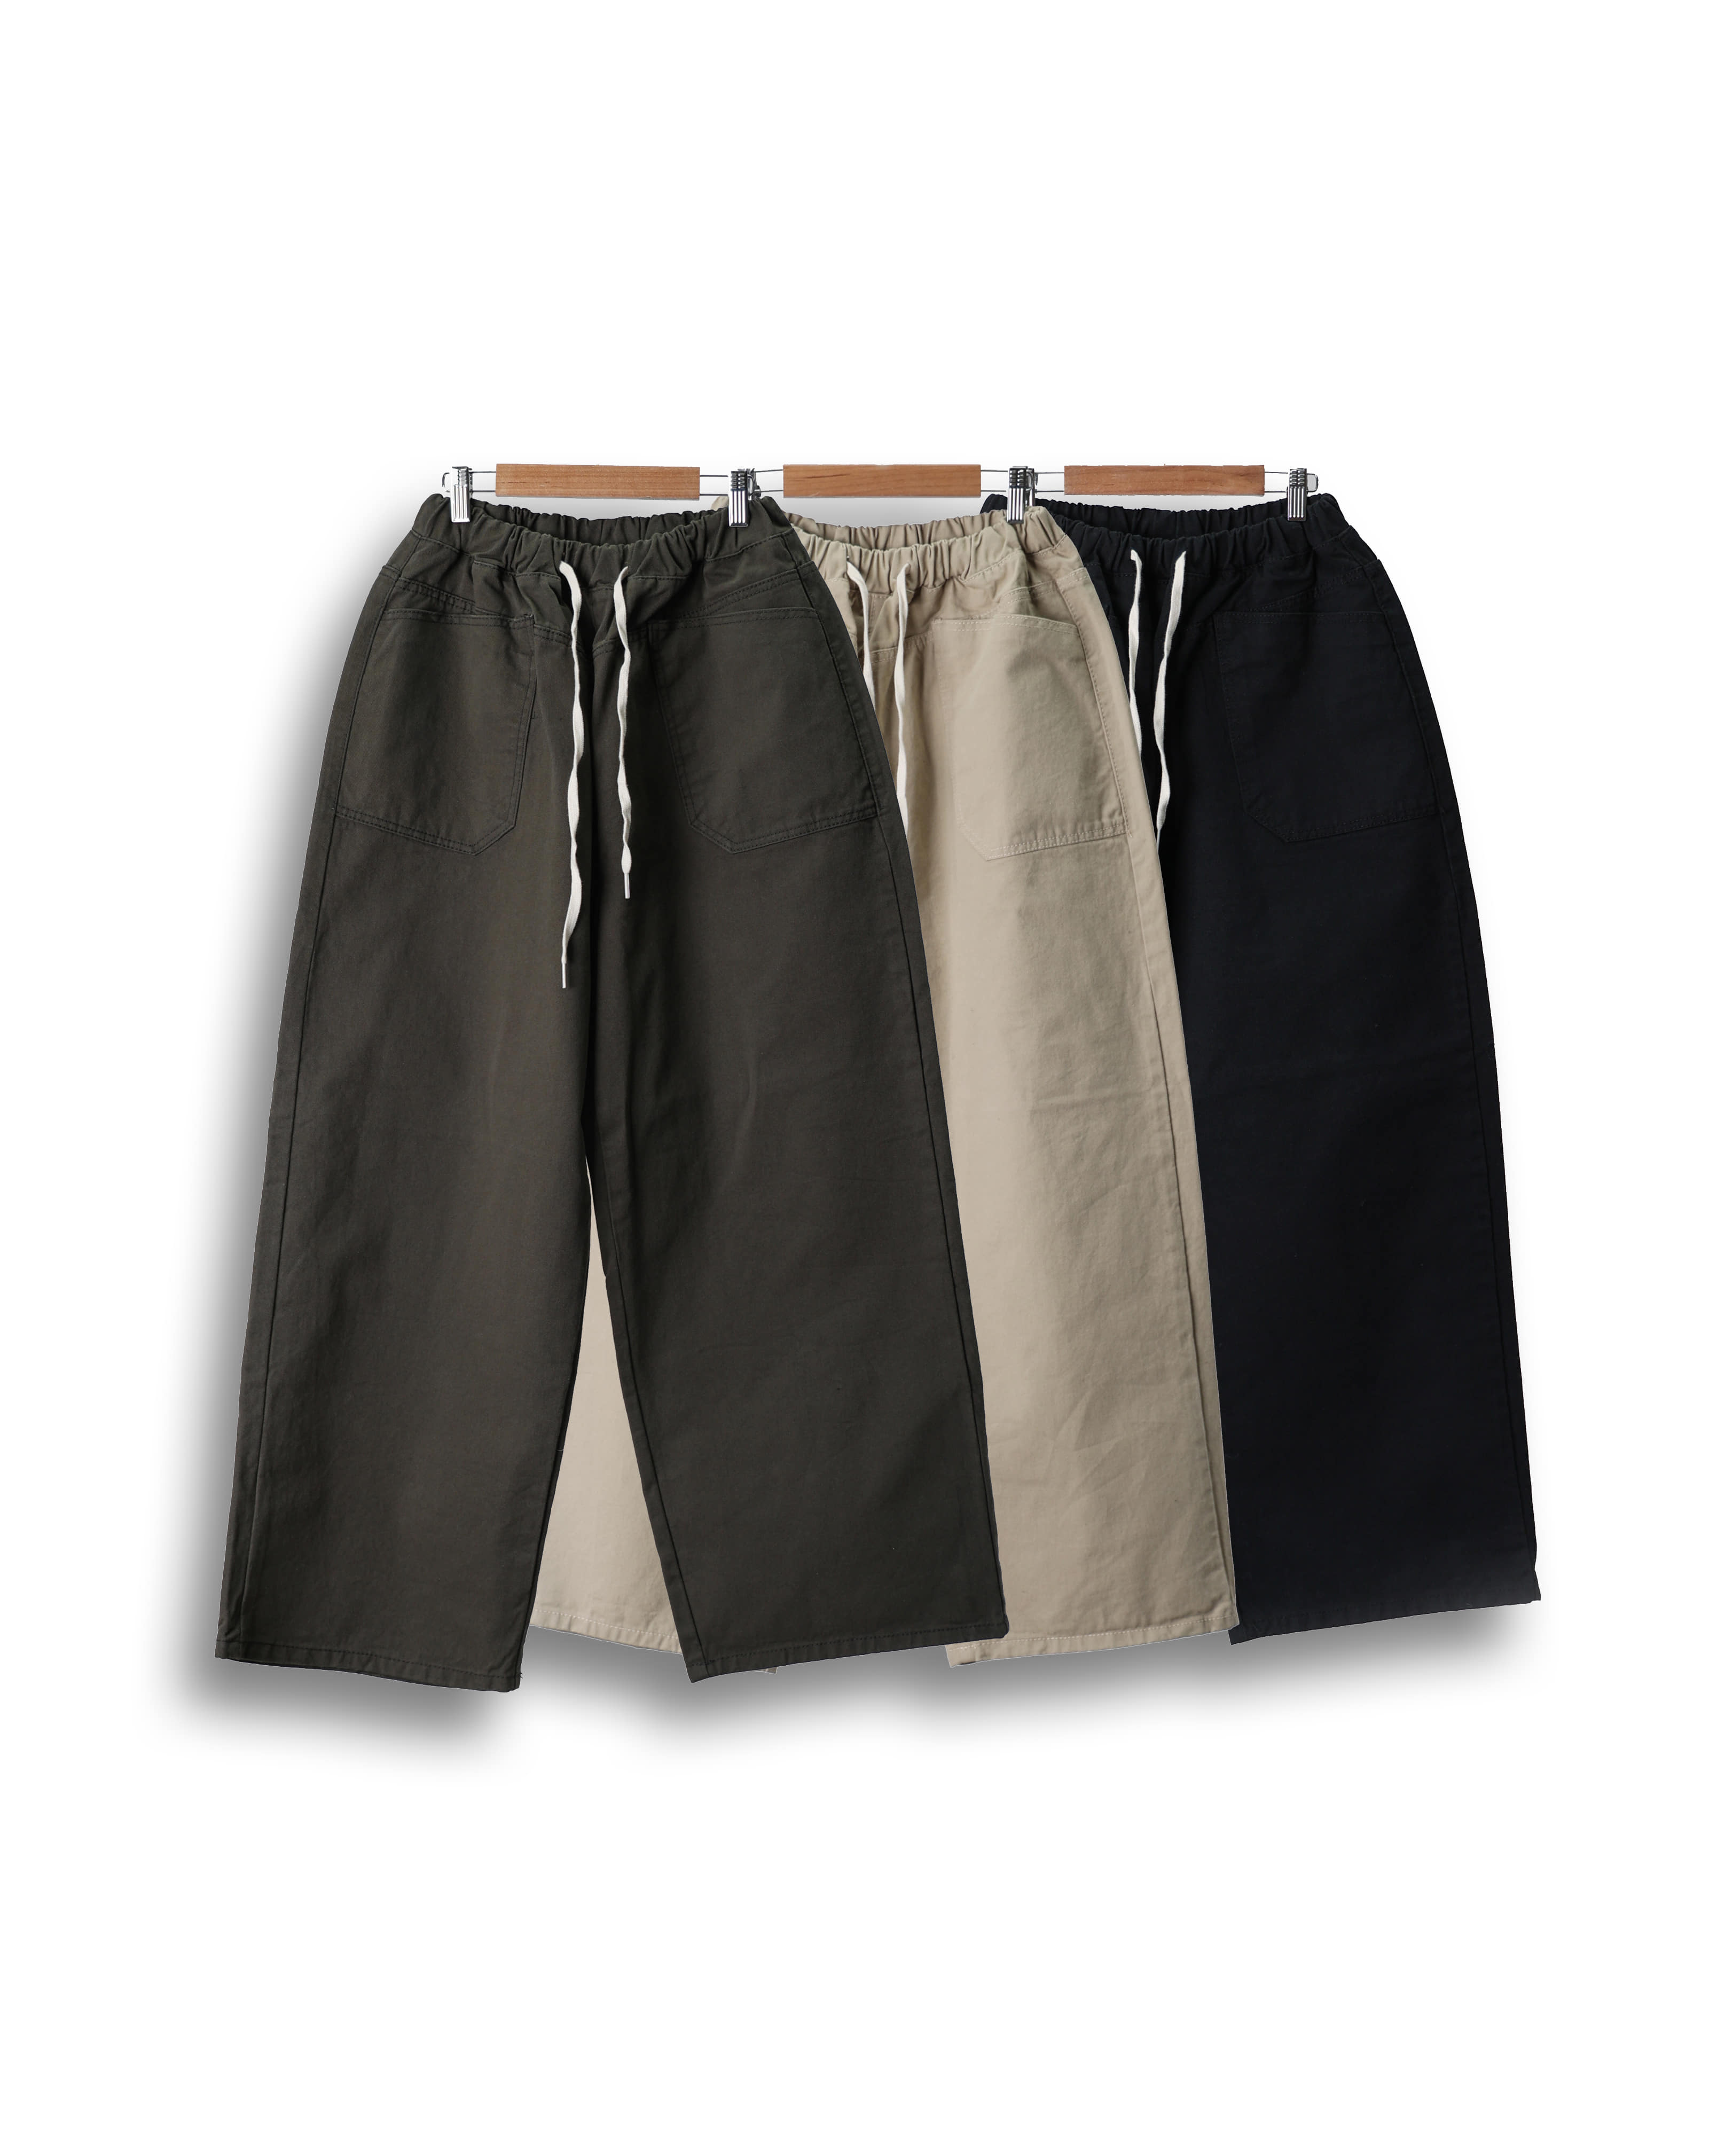 PRNADE 2265 Fatigue Wide Chino Pants (Black/Khaki/Beige)